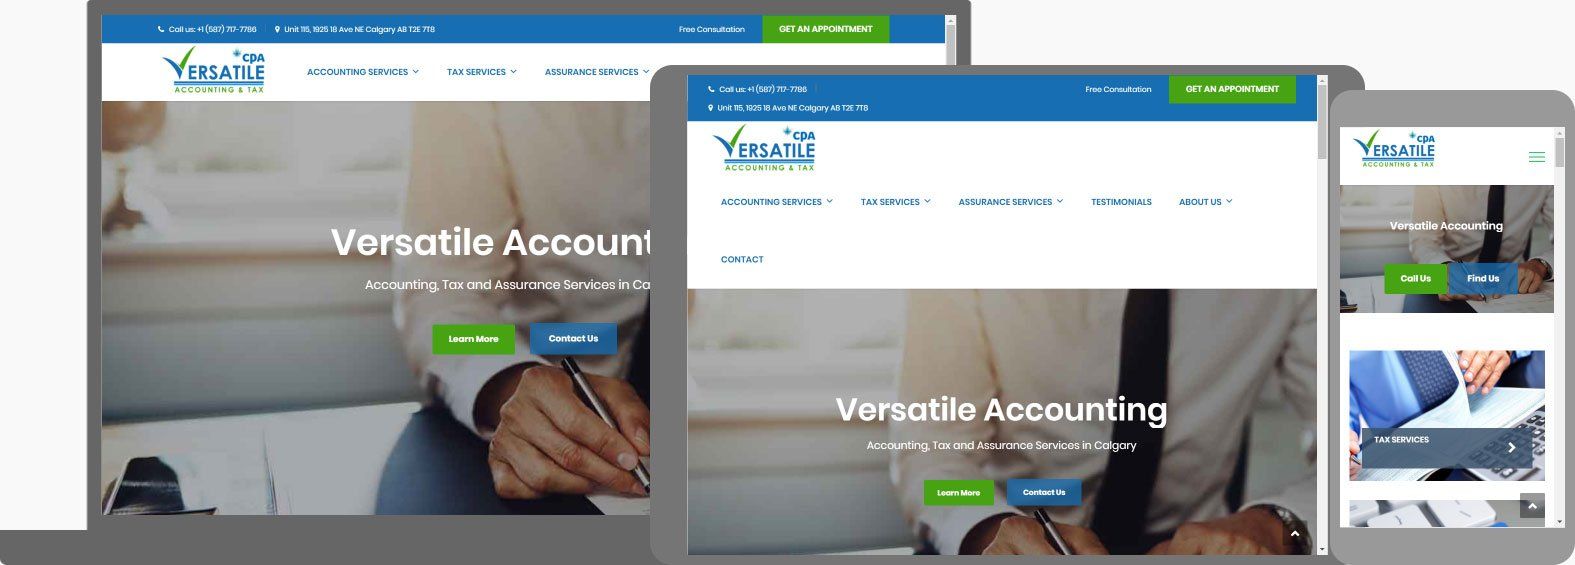 Website Design For Accountants - Versatile Accounting